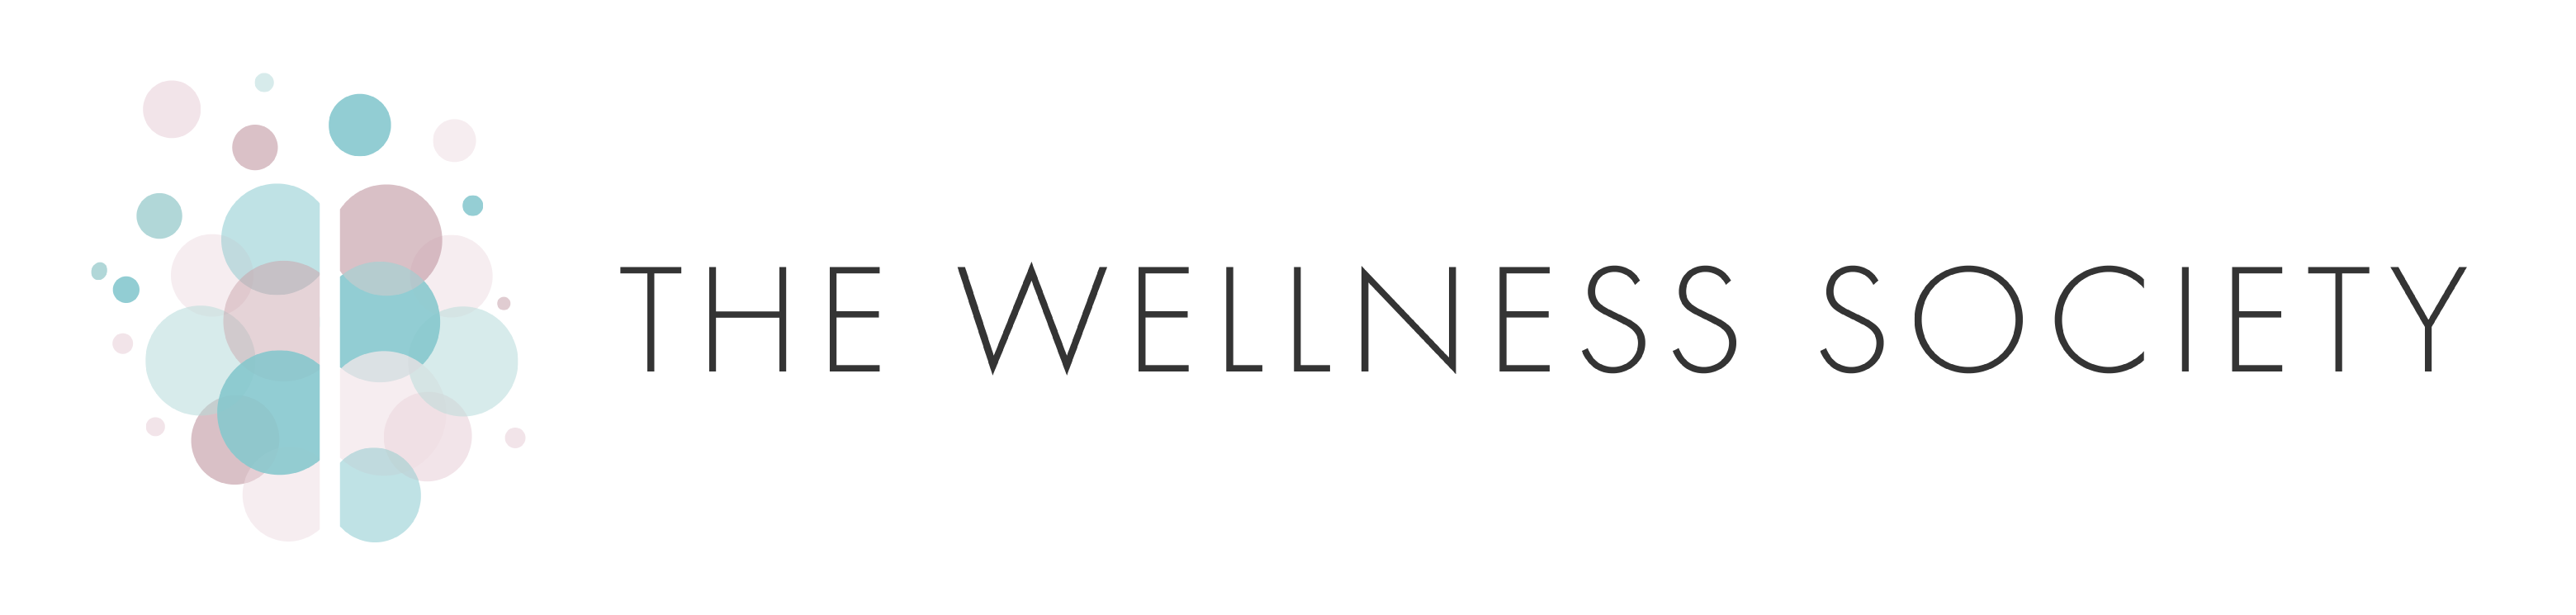 The Wellness Society